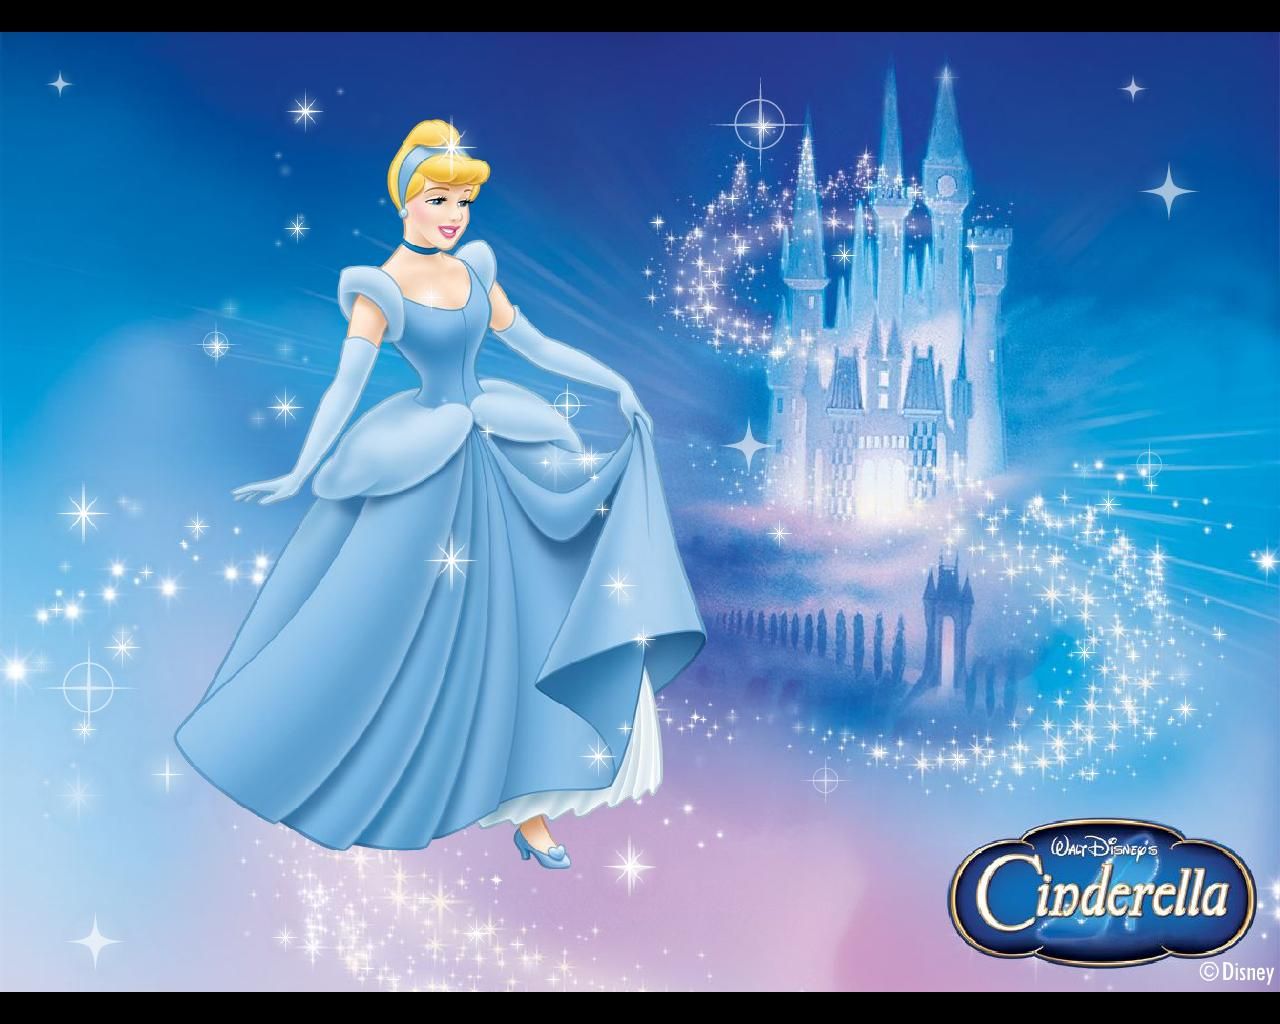 Disney princess images icons wallpapers and photos on fanpop cinderella cartoon cinderella disney cinderella